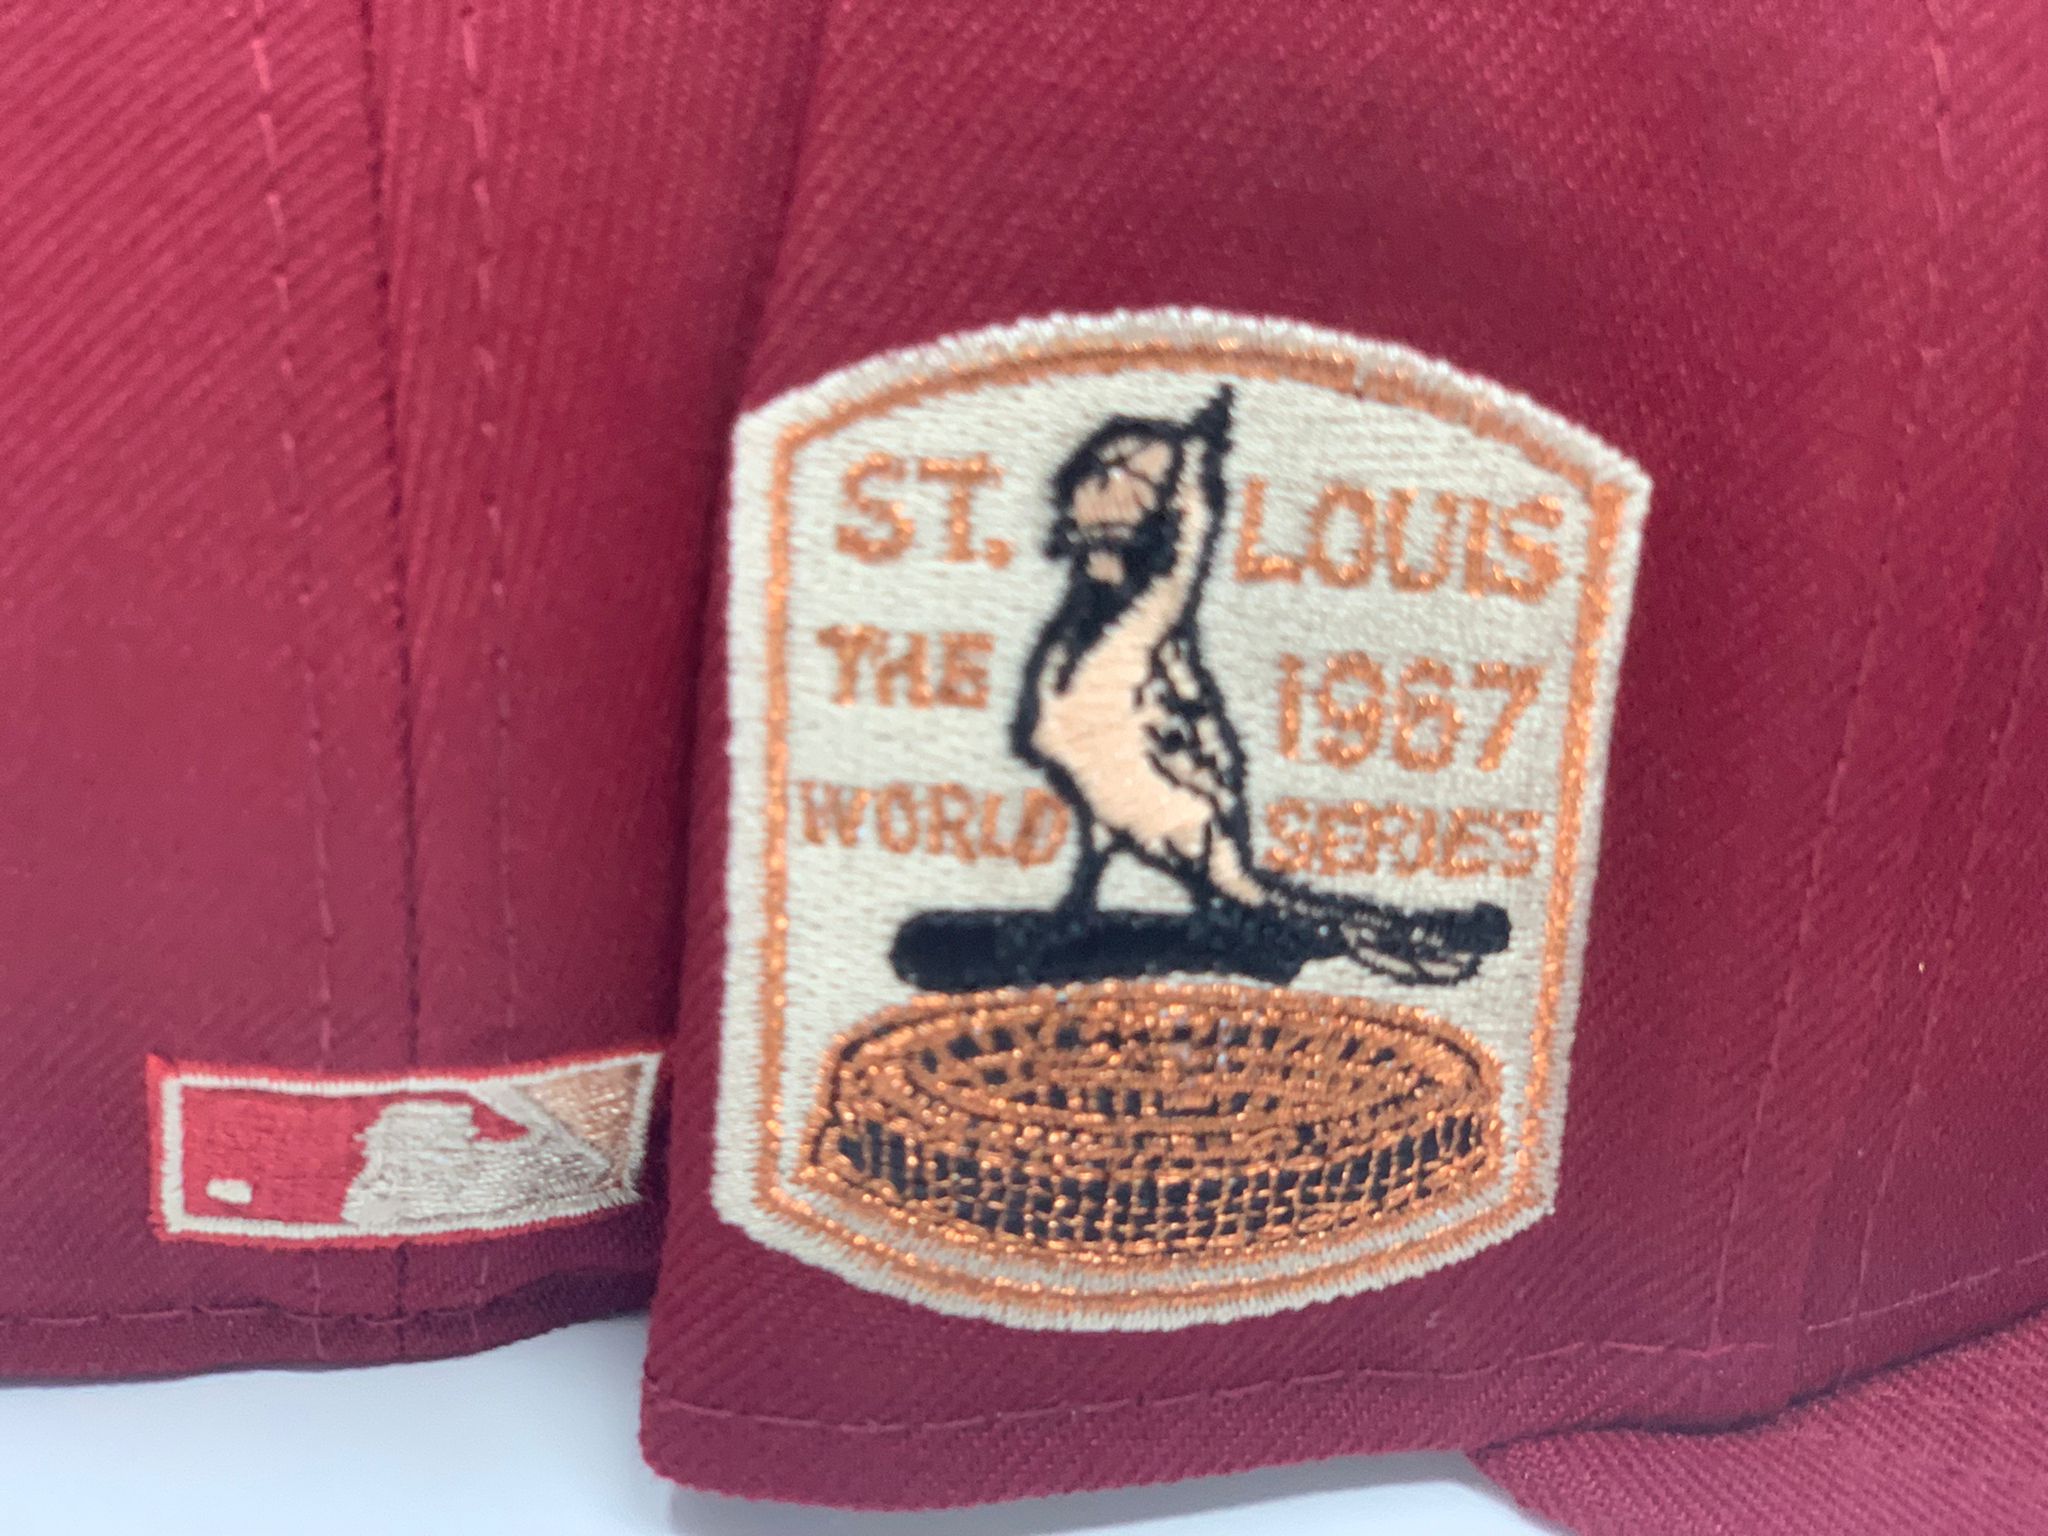 Vintage St. Louis Cardinals 1987 World Series Shirt Size Small